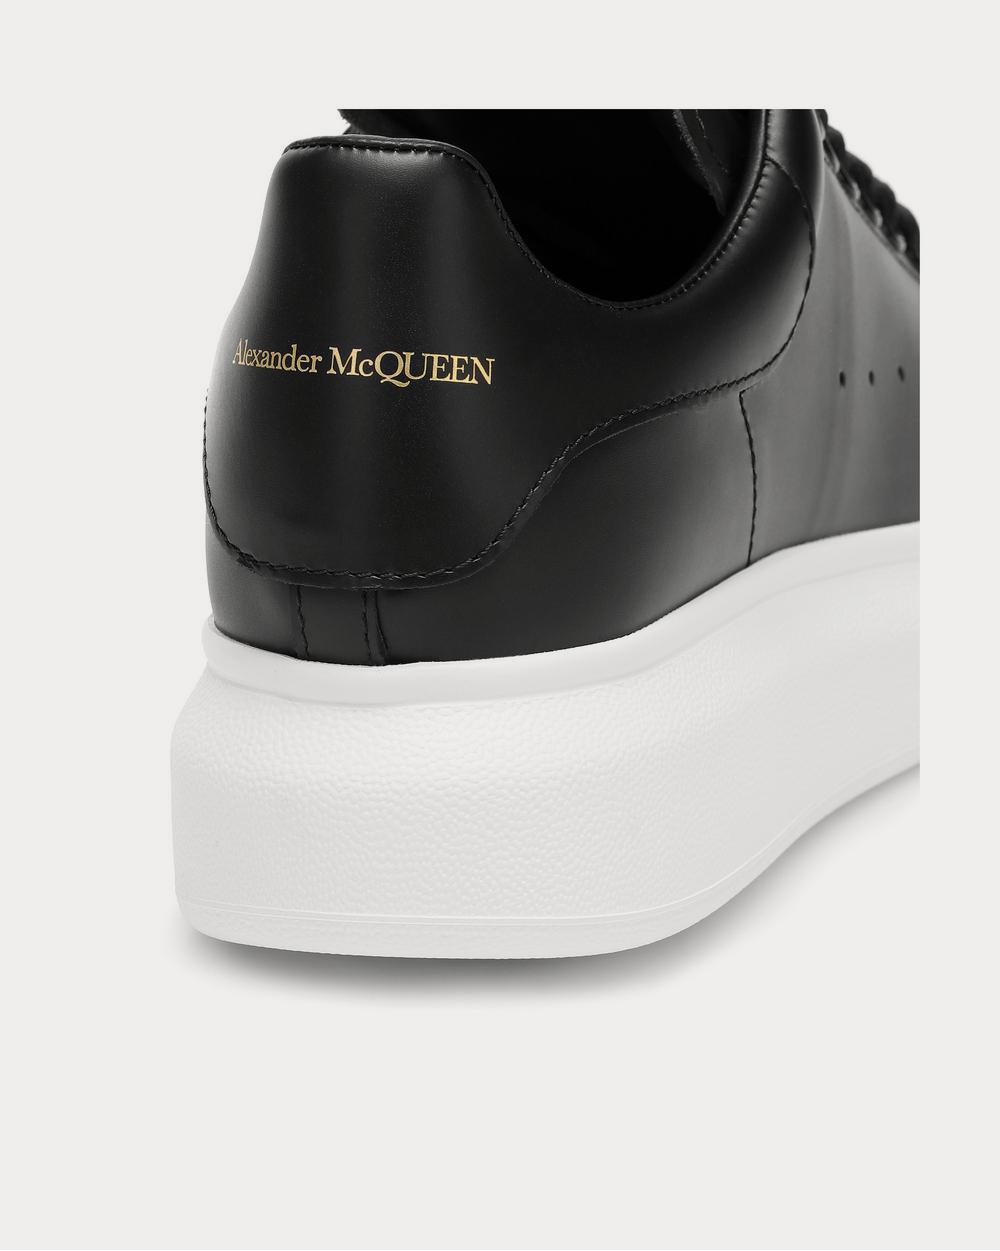 Alexander McQueen Leather Black Low Top Sneakers - Sneak in Peace